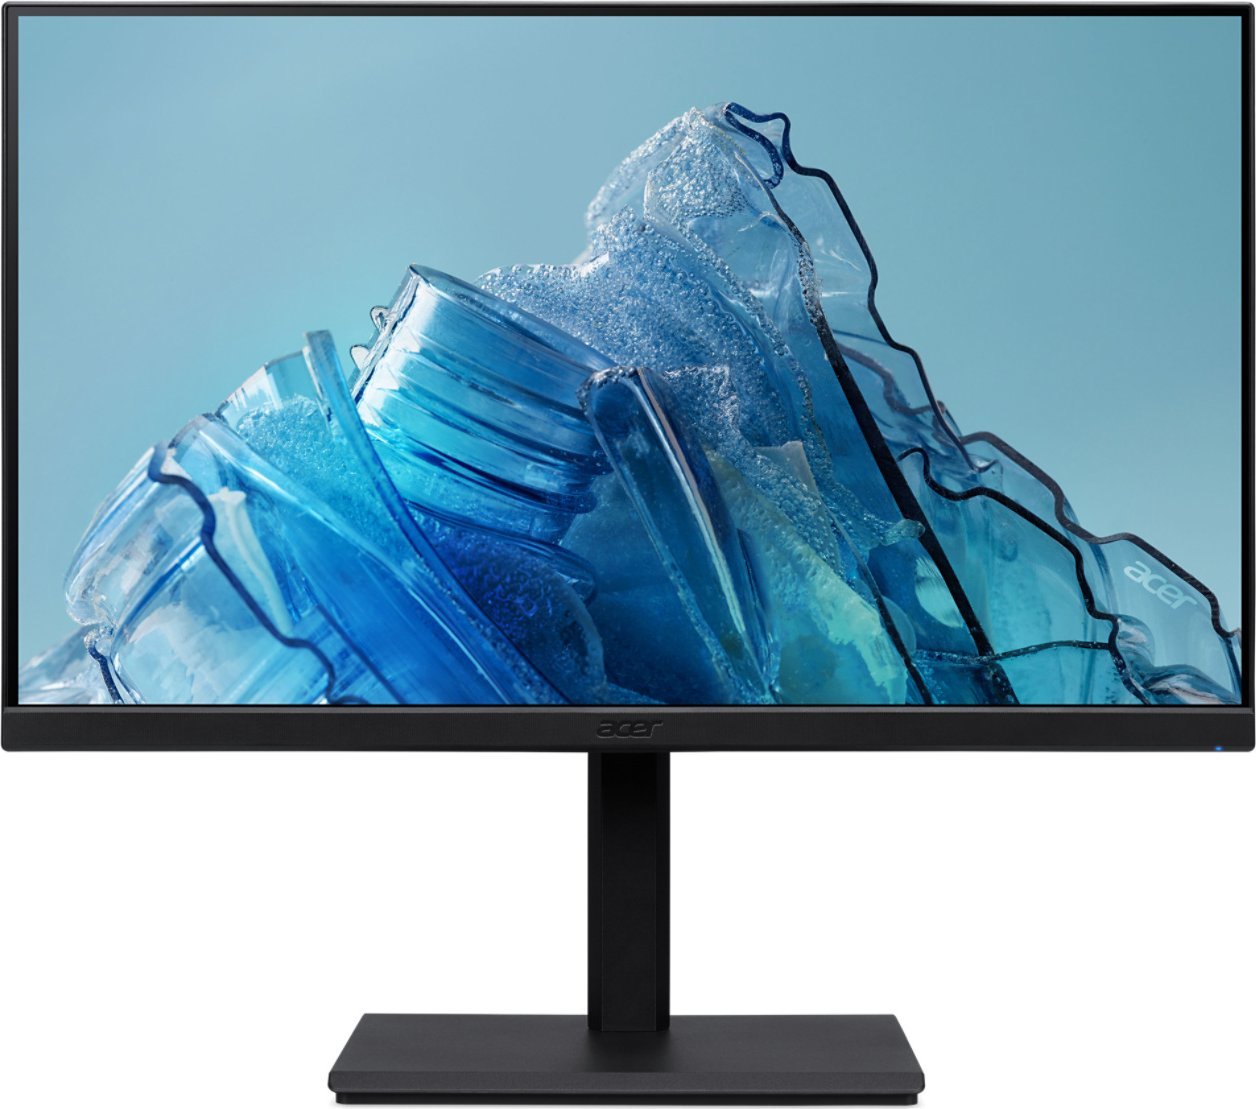 Acer CB271 bmirux - LED monitor - Full HD (1080p) - 27" monitors